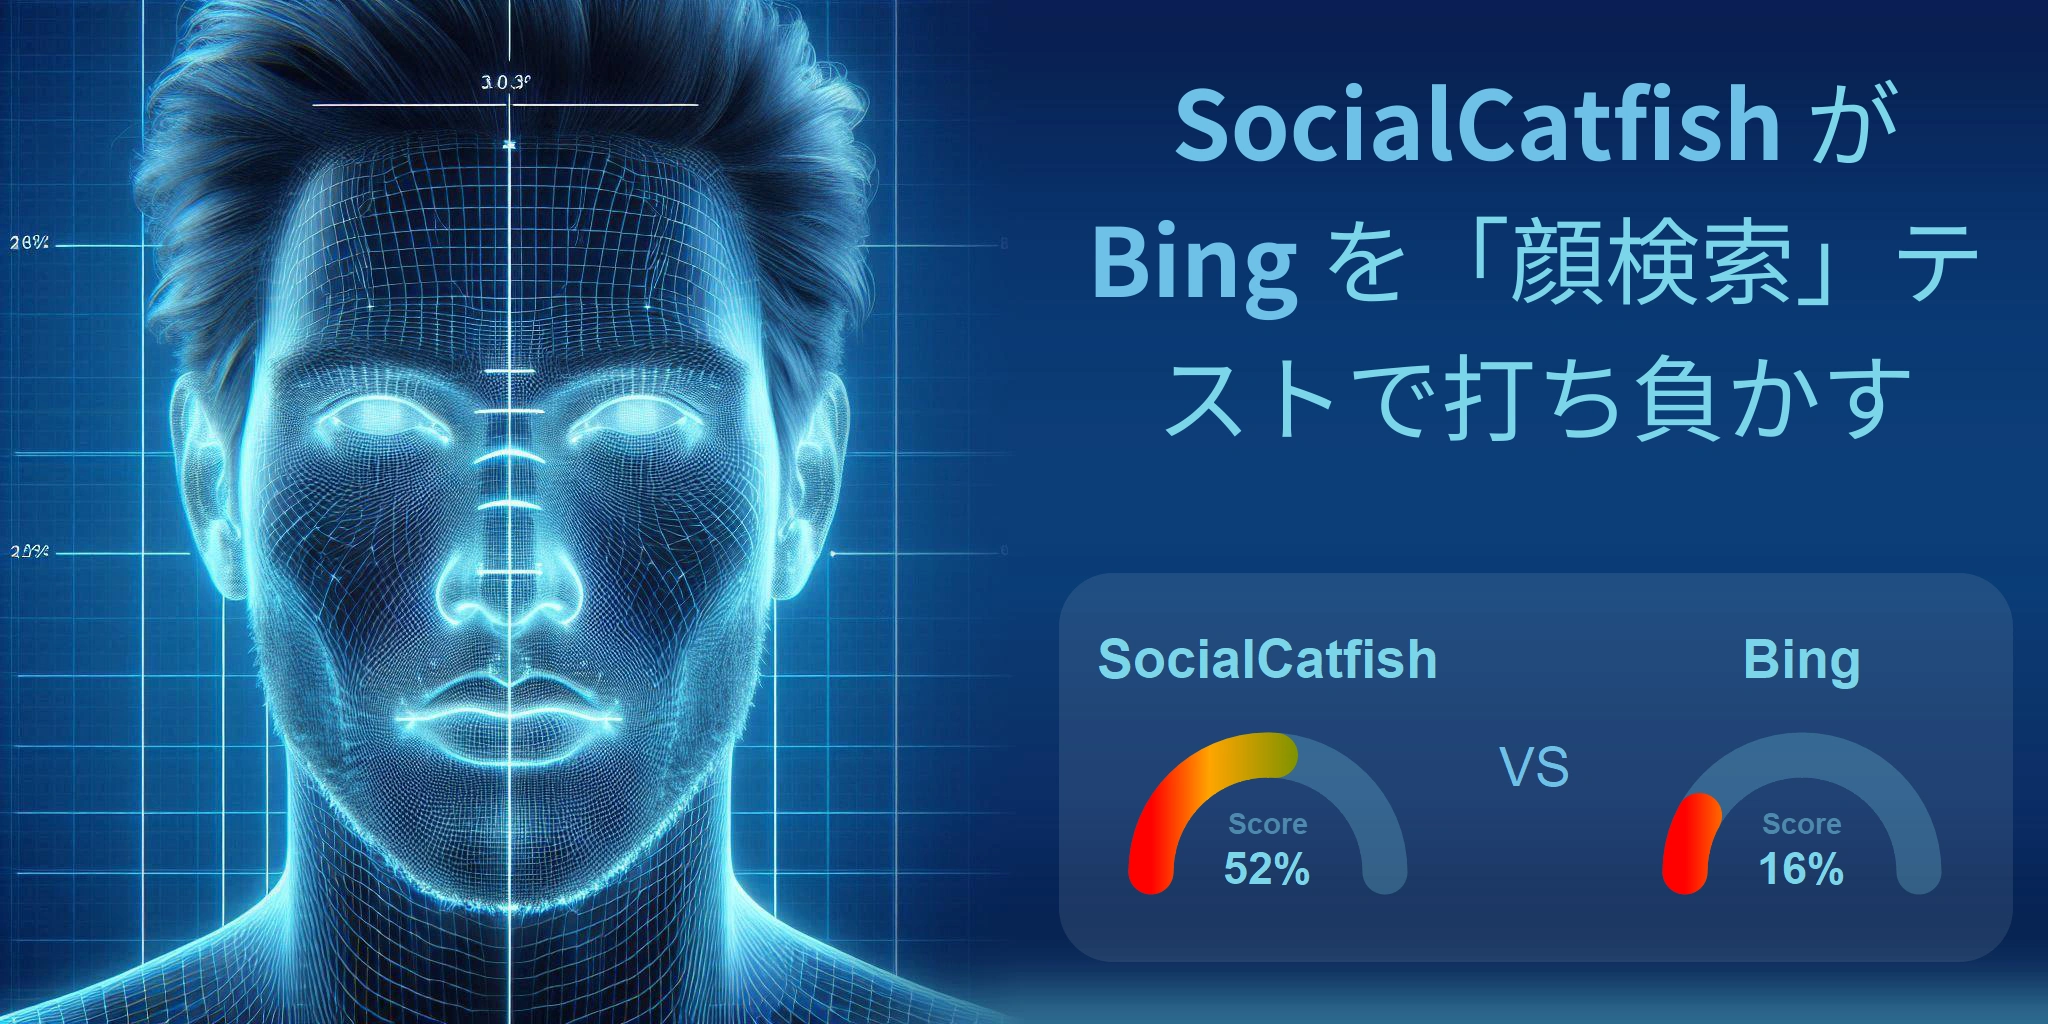 Bing.com vs SocialCatfish.com